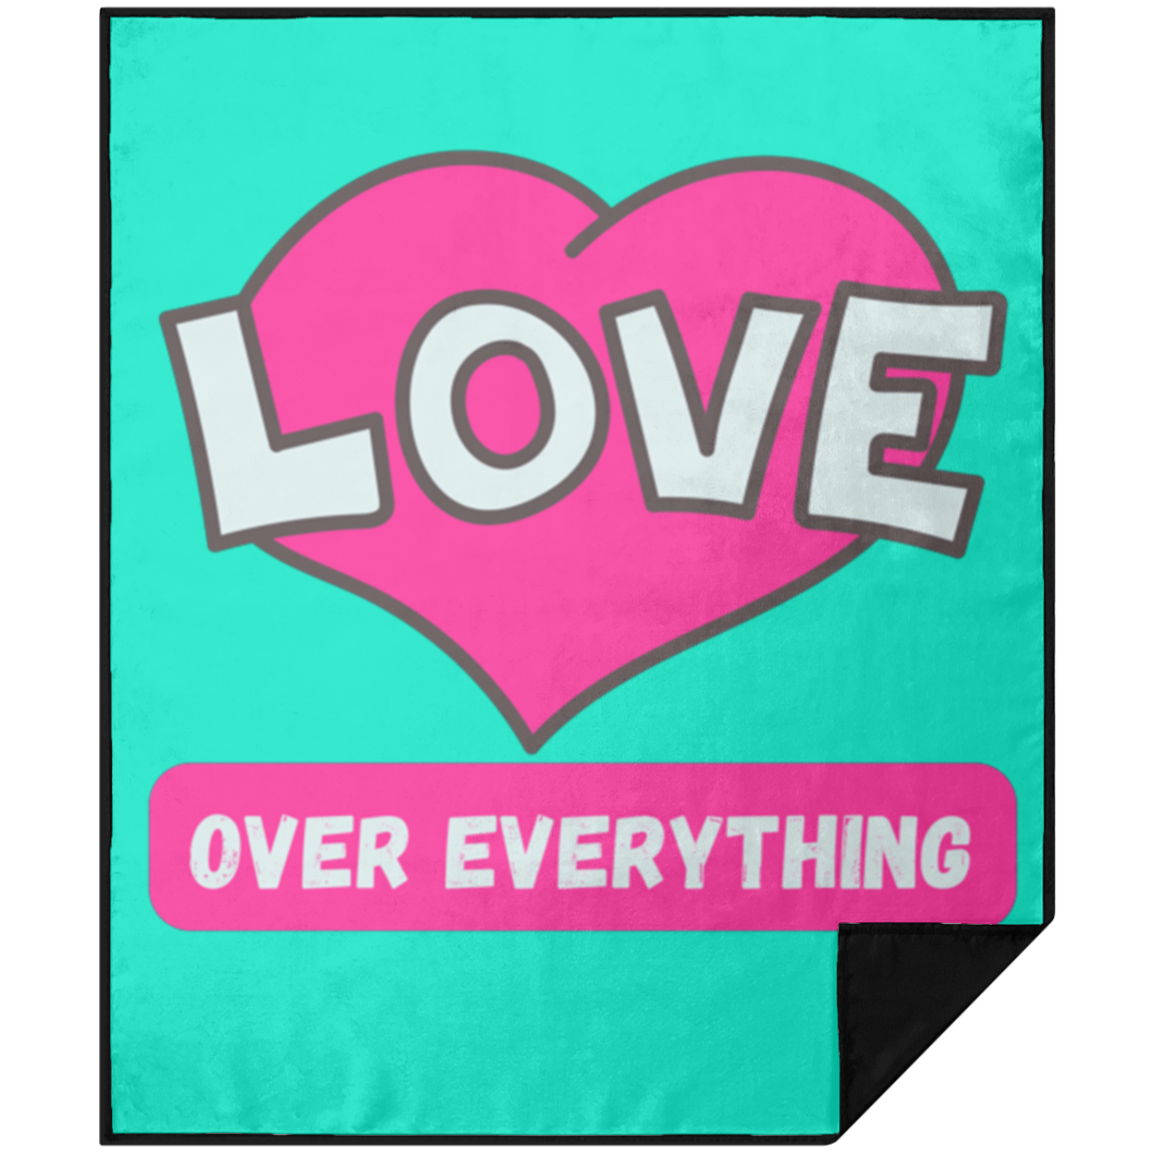 Love over everything Premium Picnic Blanket 50x60